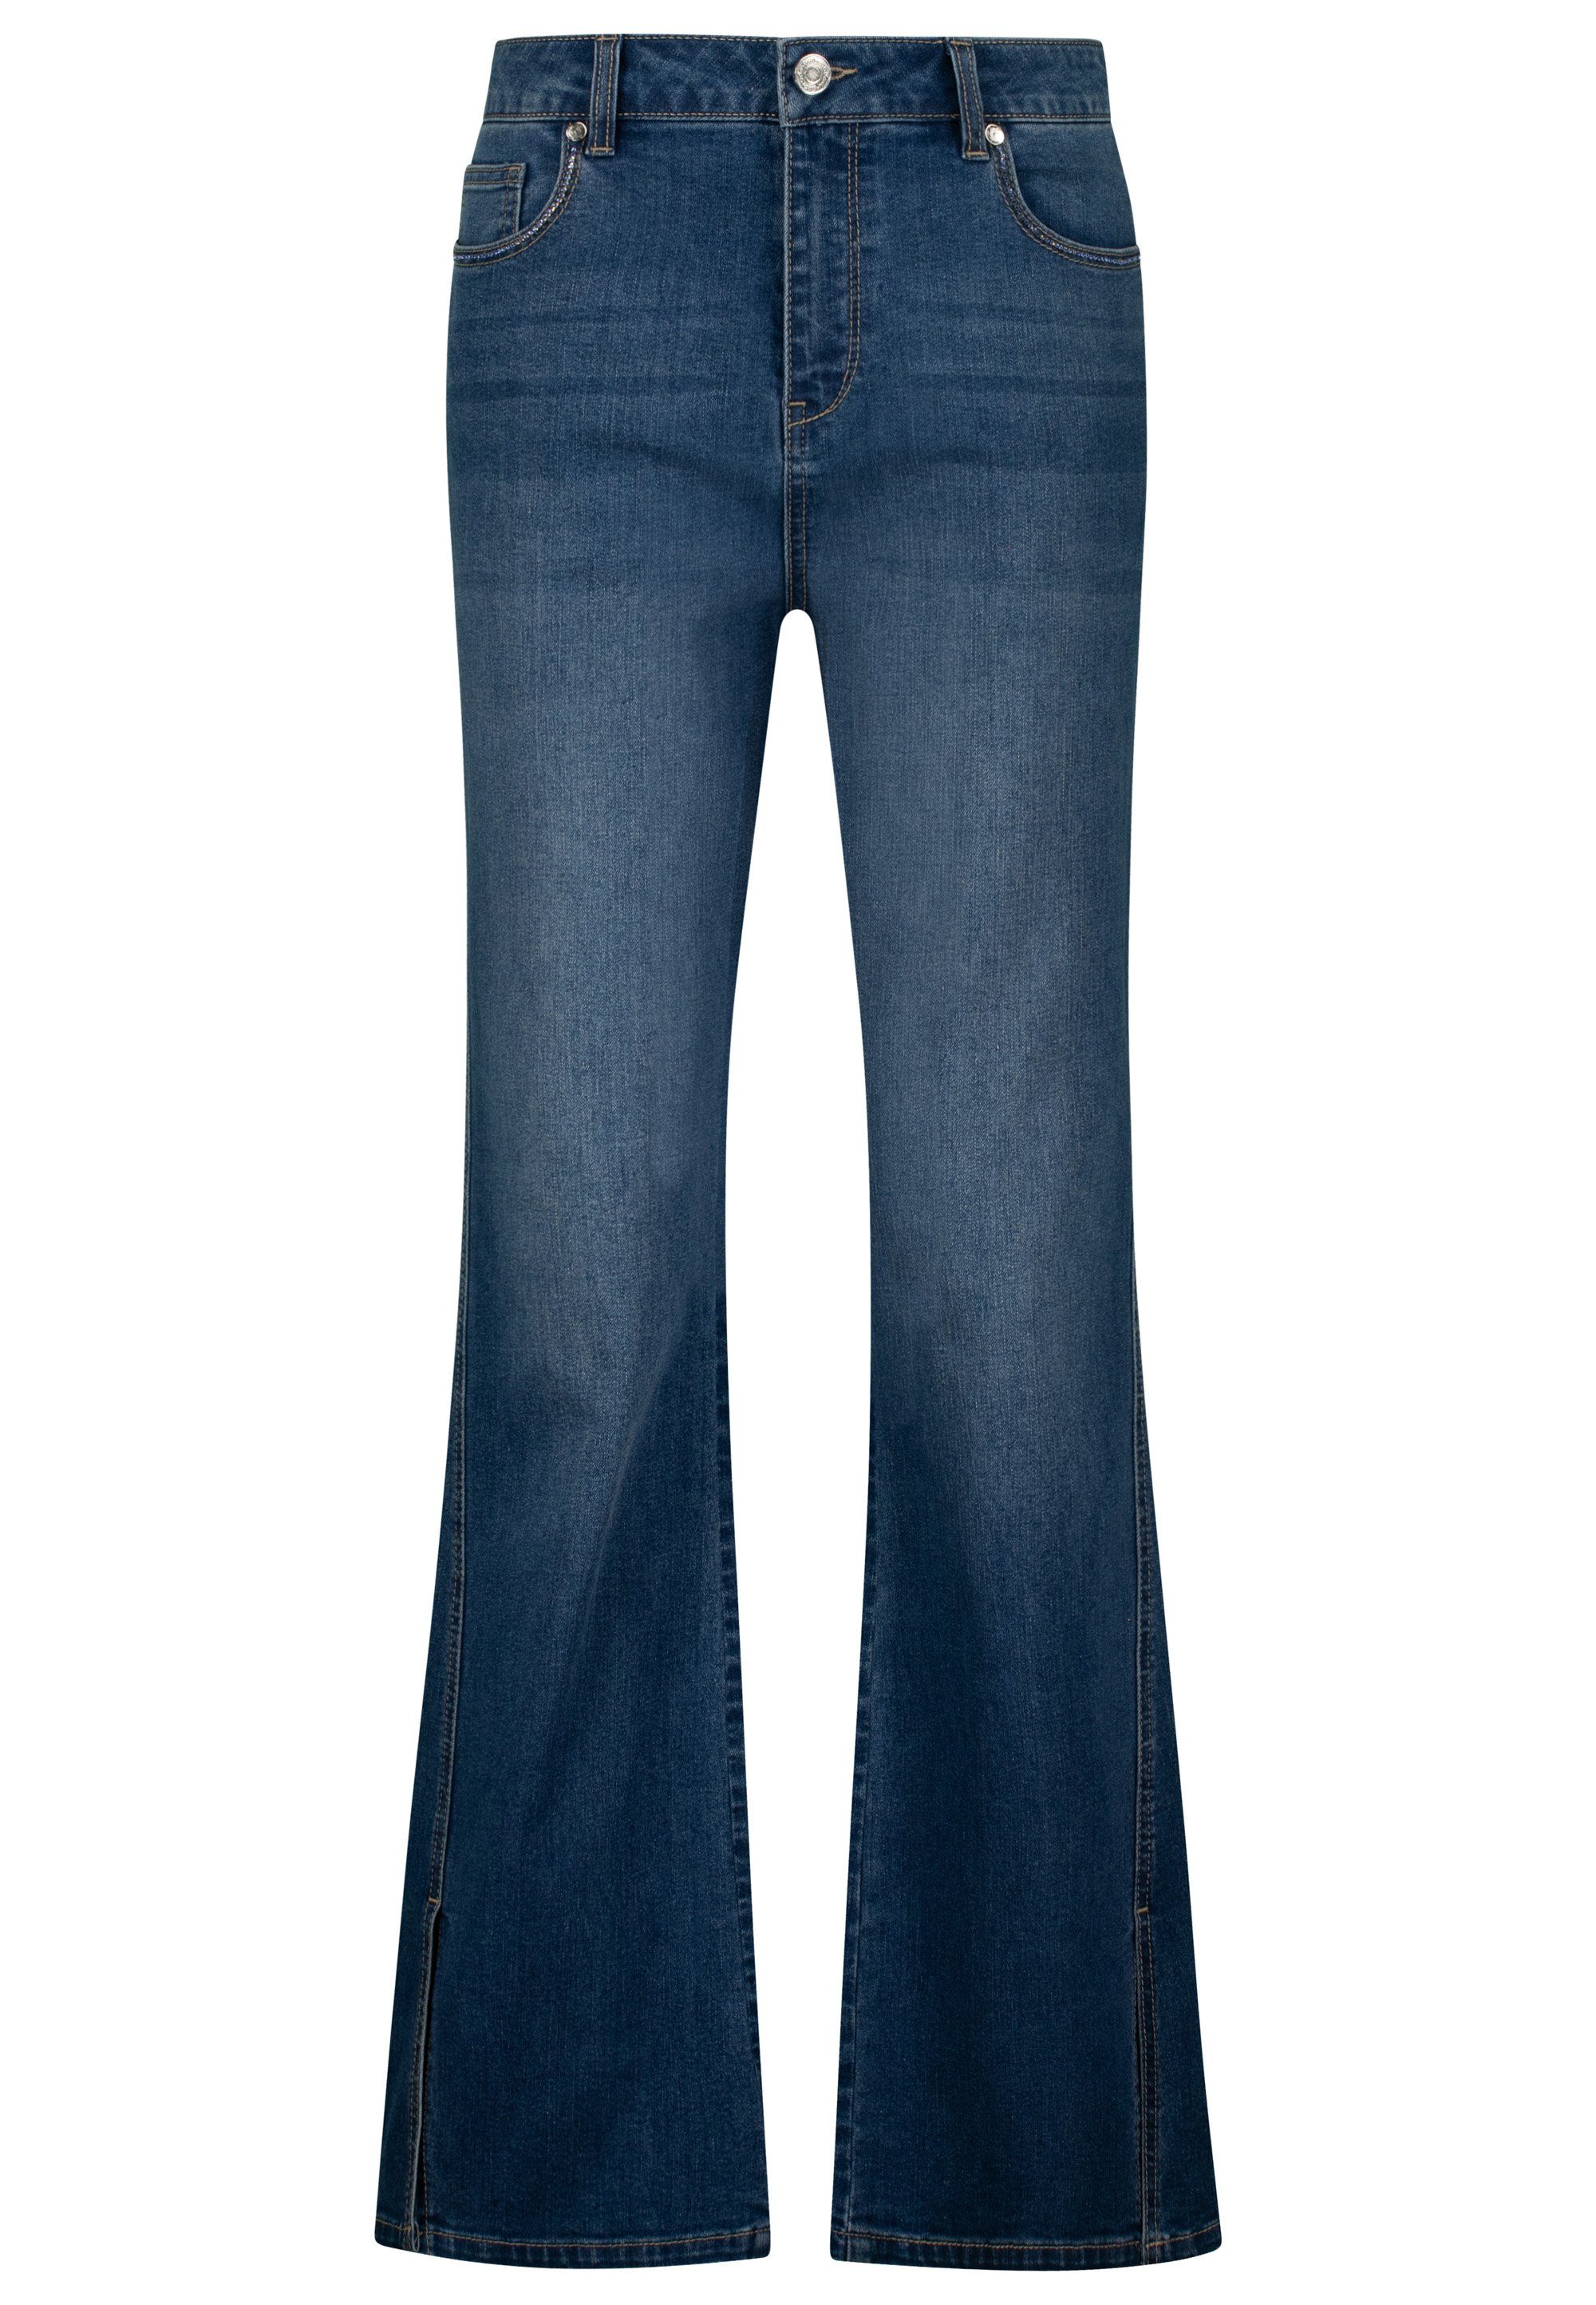 Jeans tollen im Bootcut-Schnitt Bequeme October